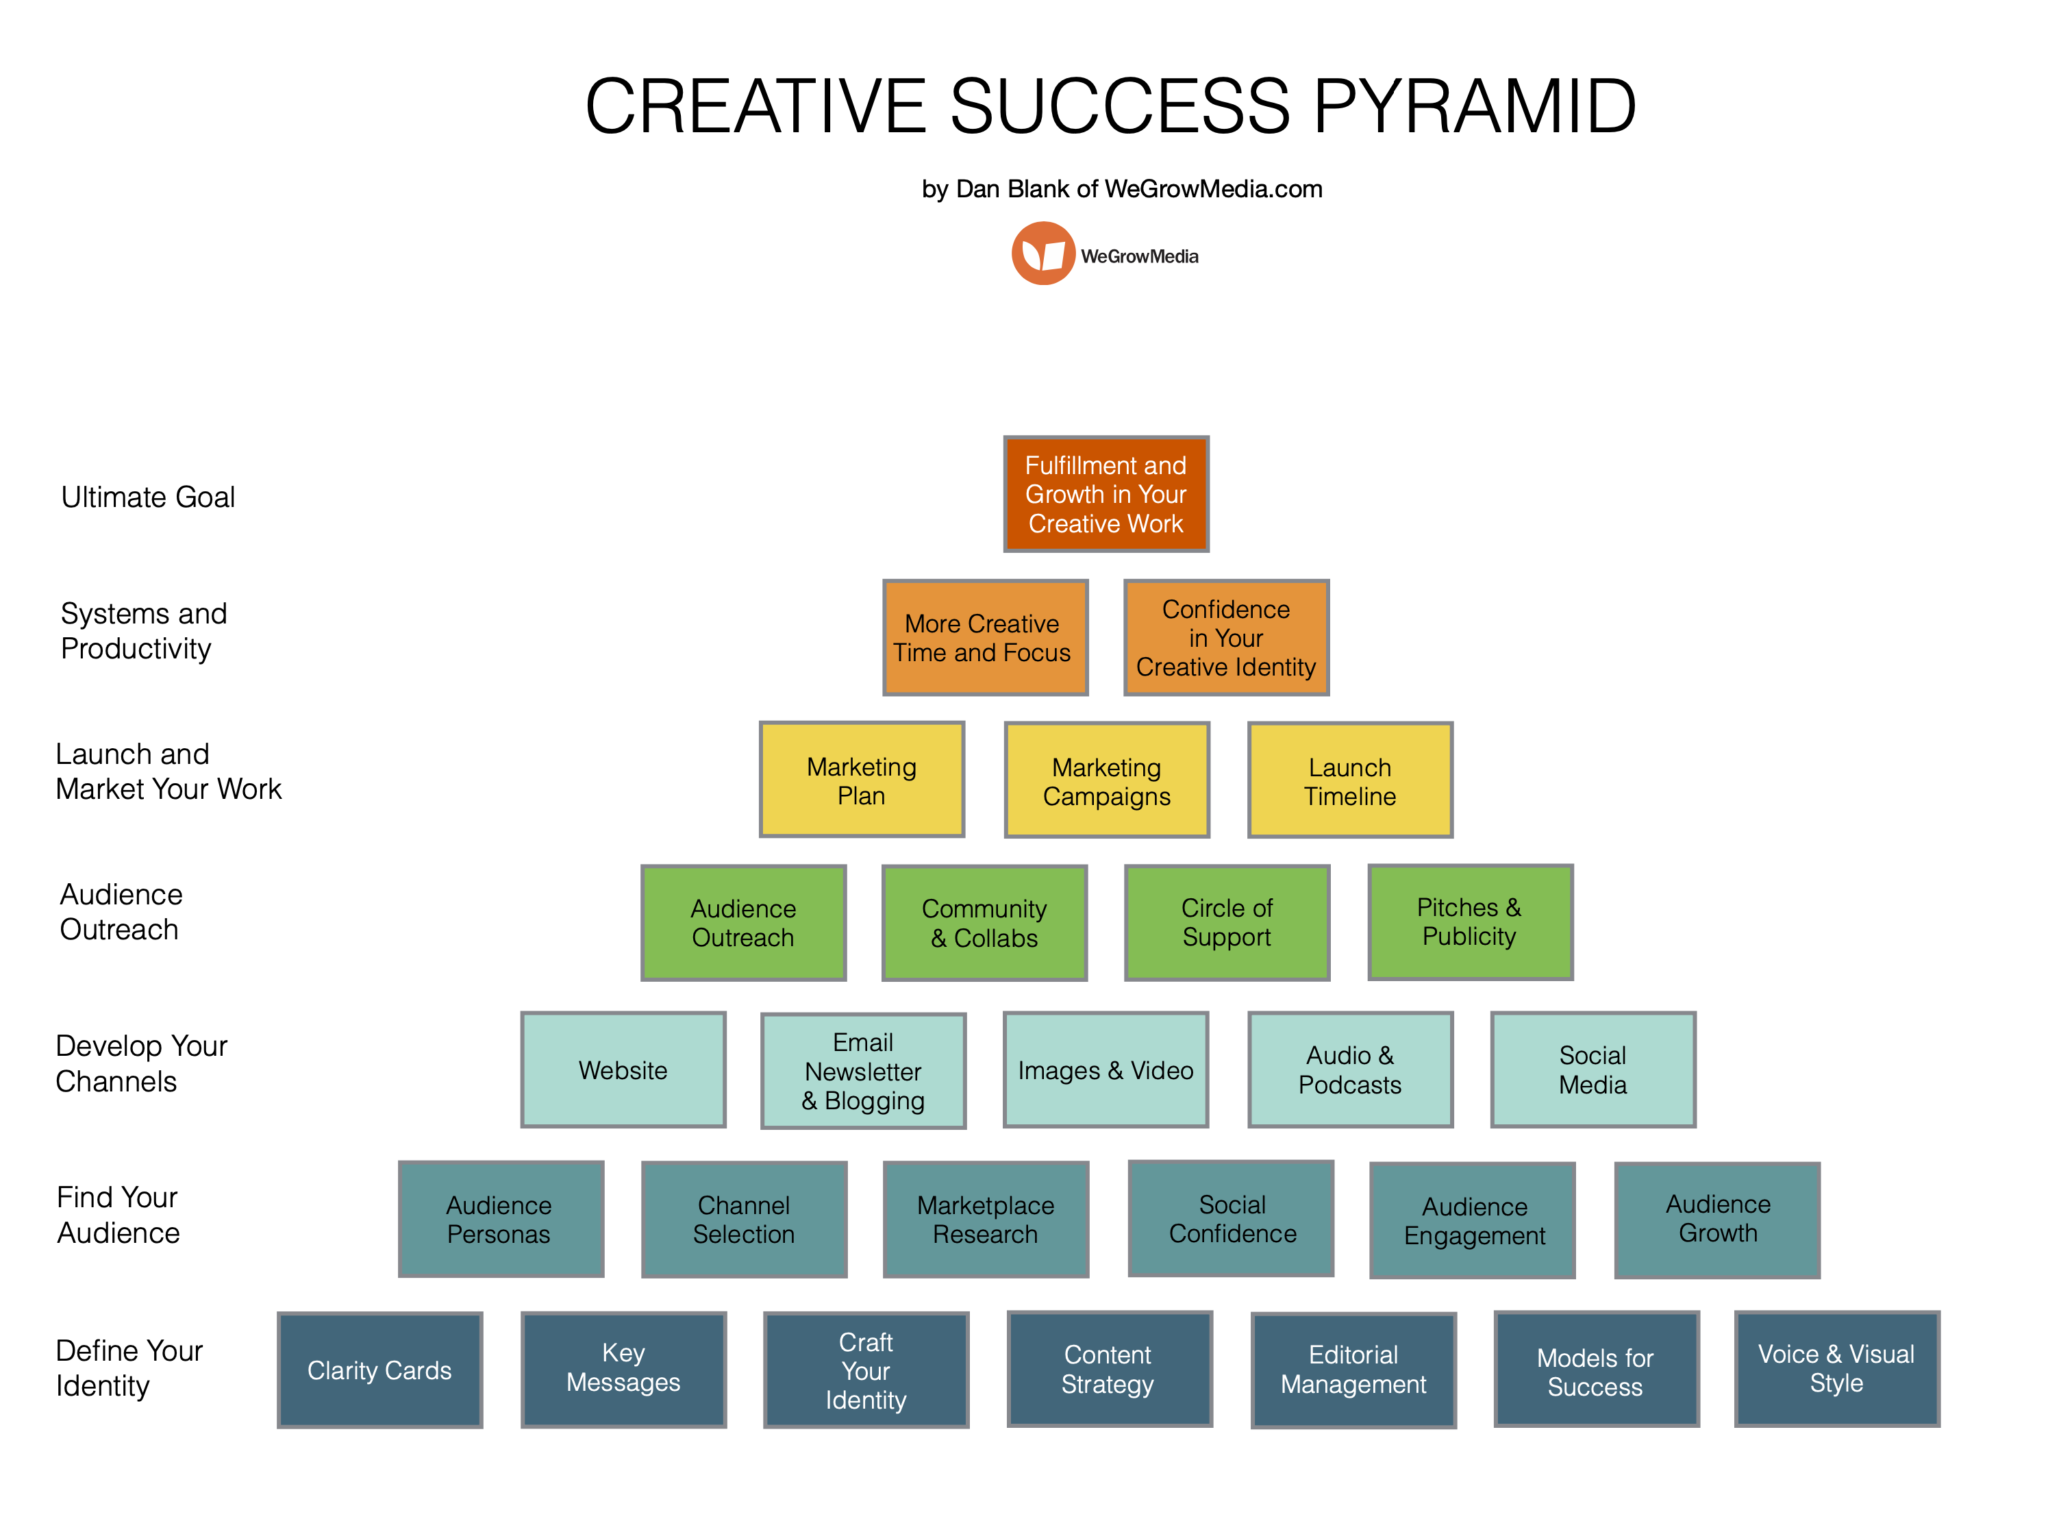 The Creative Success Pyramid